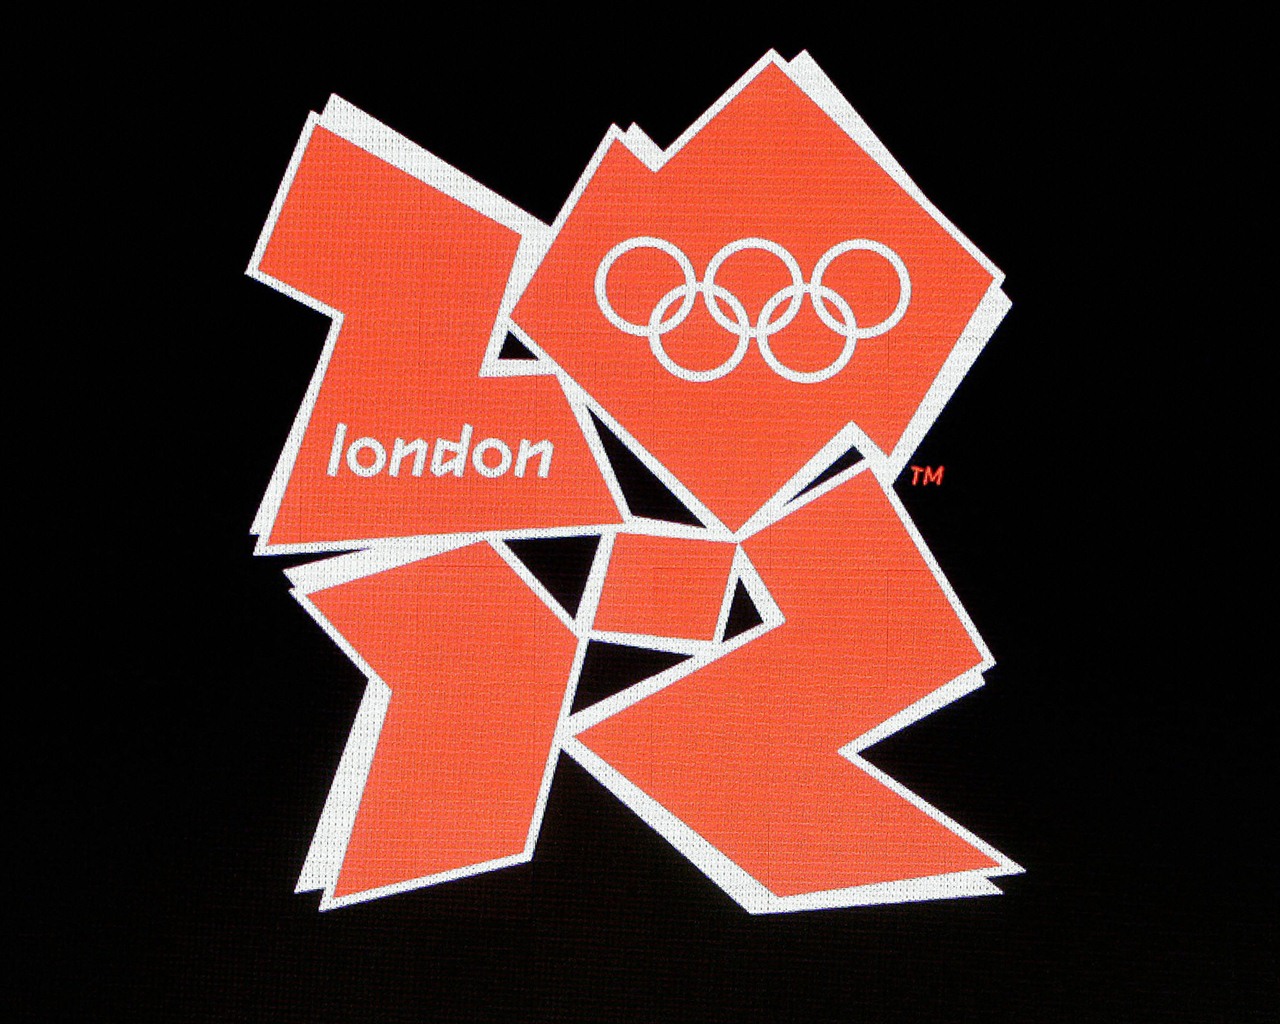 London 2012 Olympics theme wallpapers (2) #30 - 1280x1024